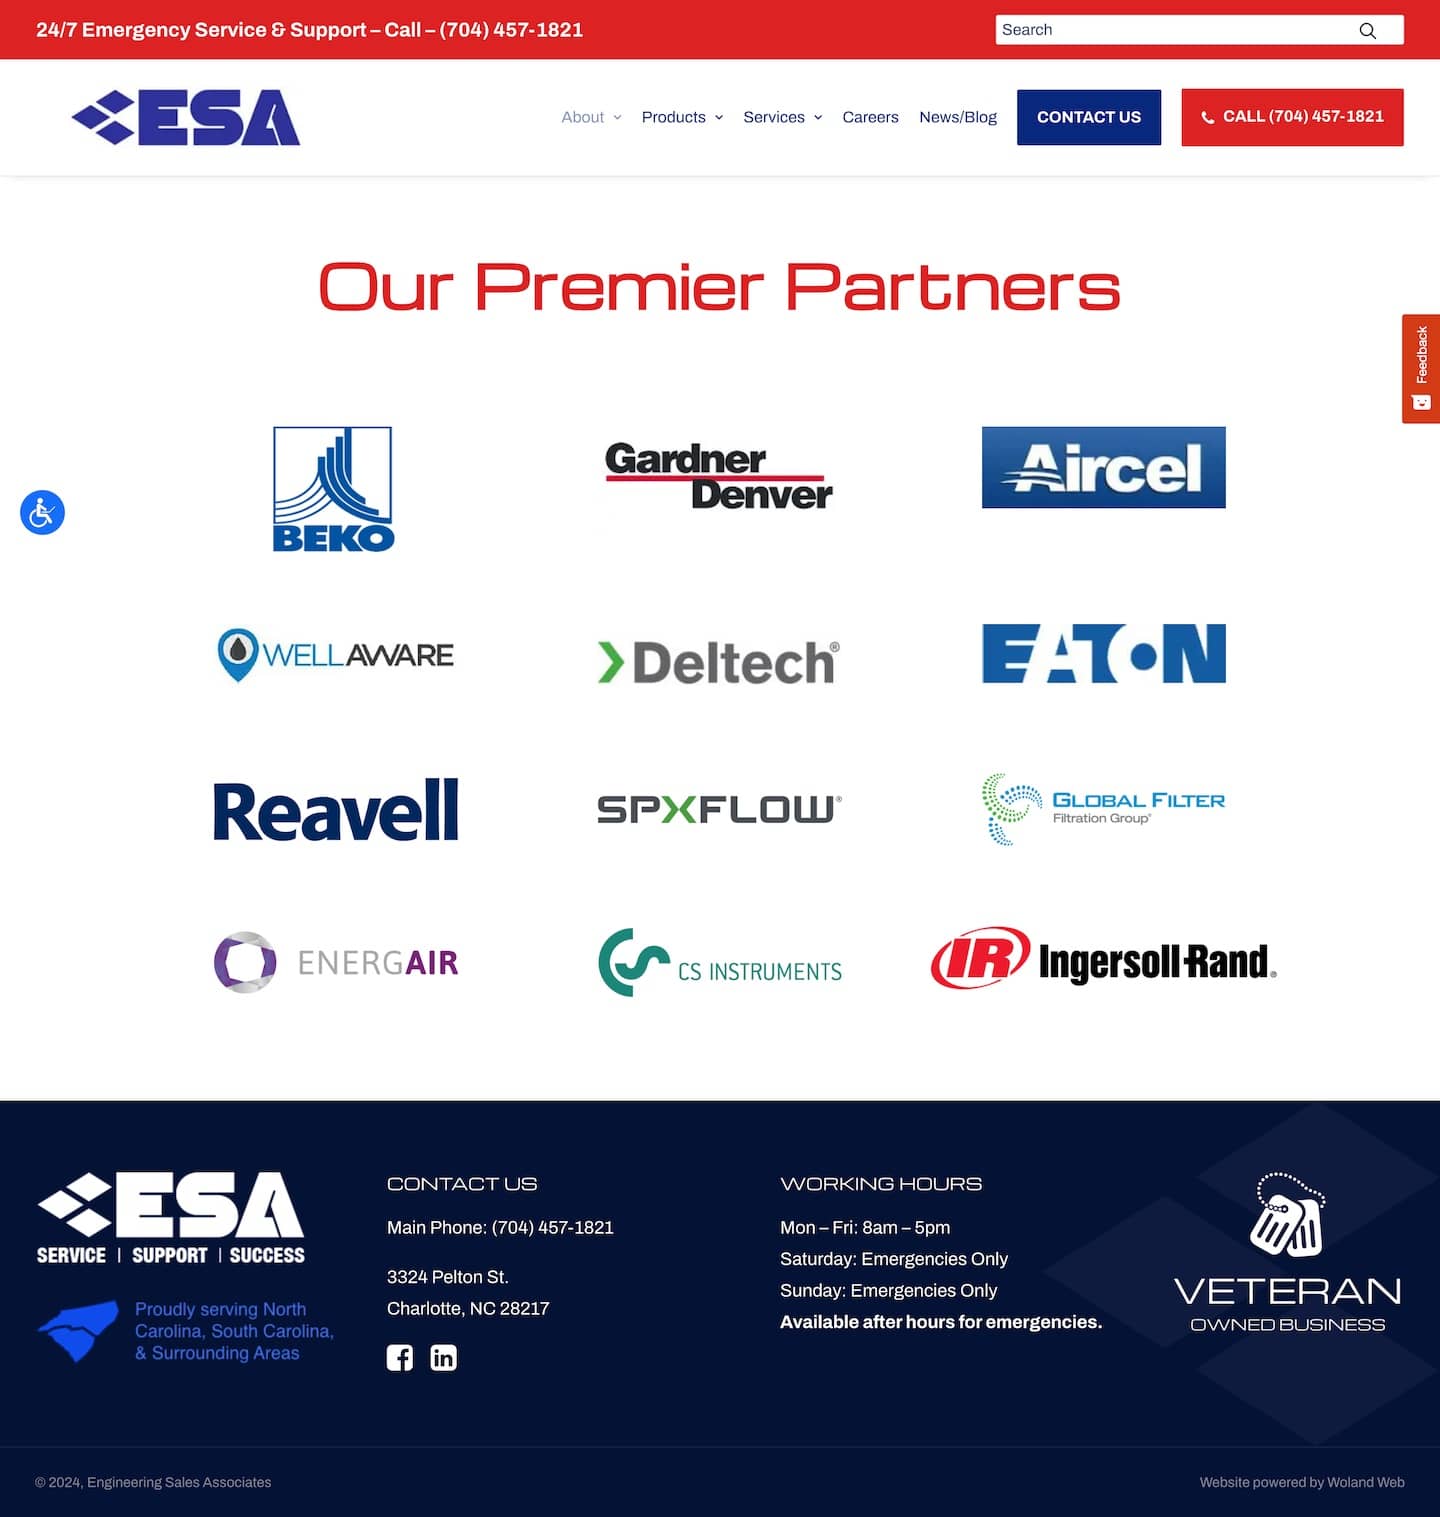 ESA Engineering Sales Associates website partners page